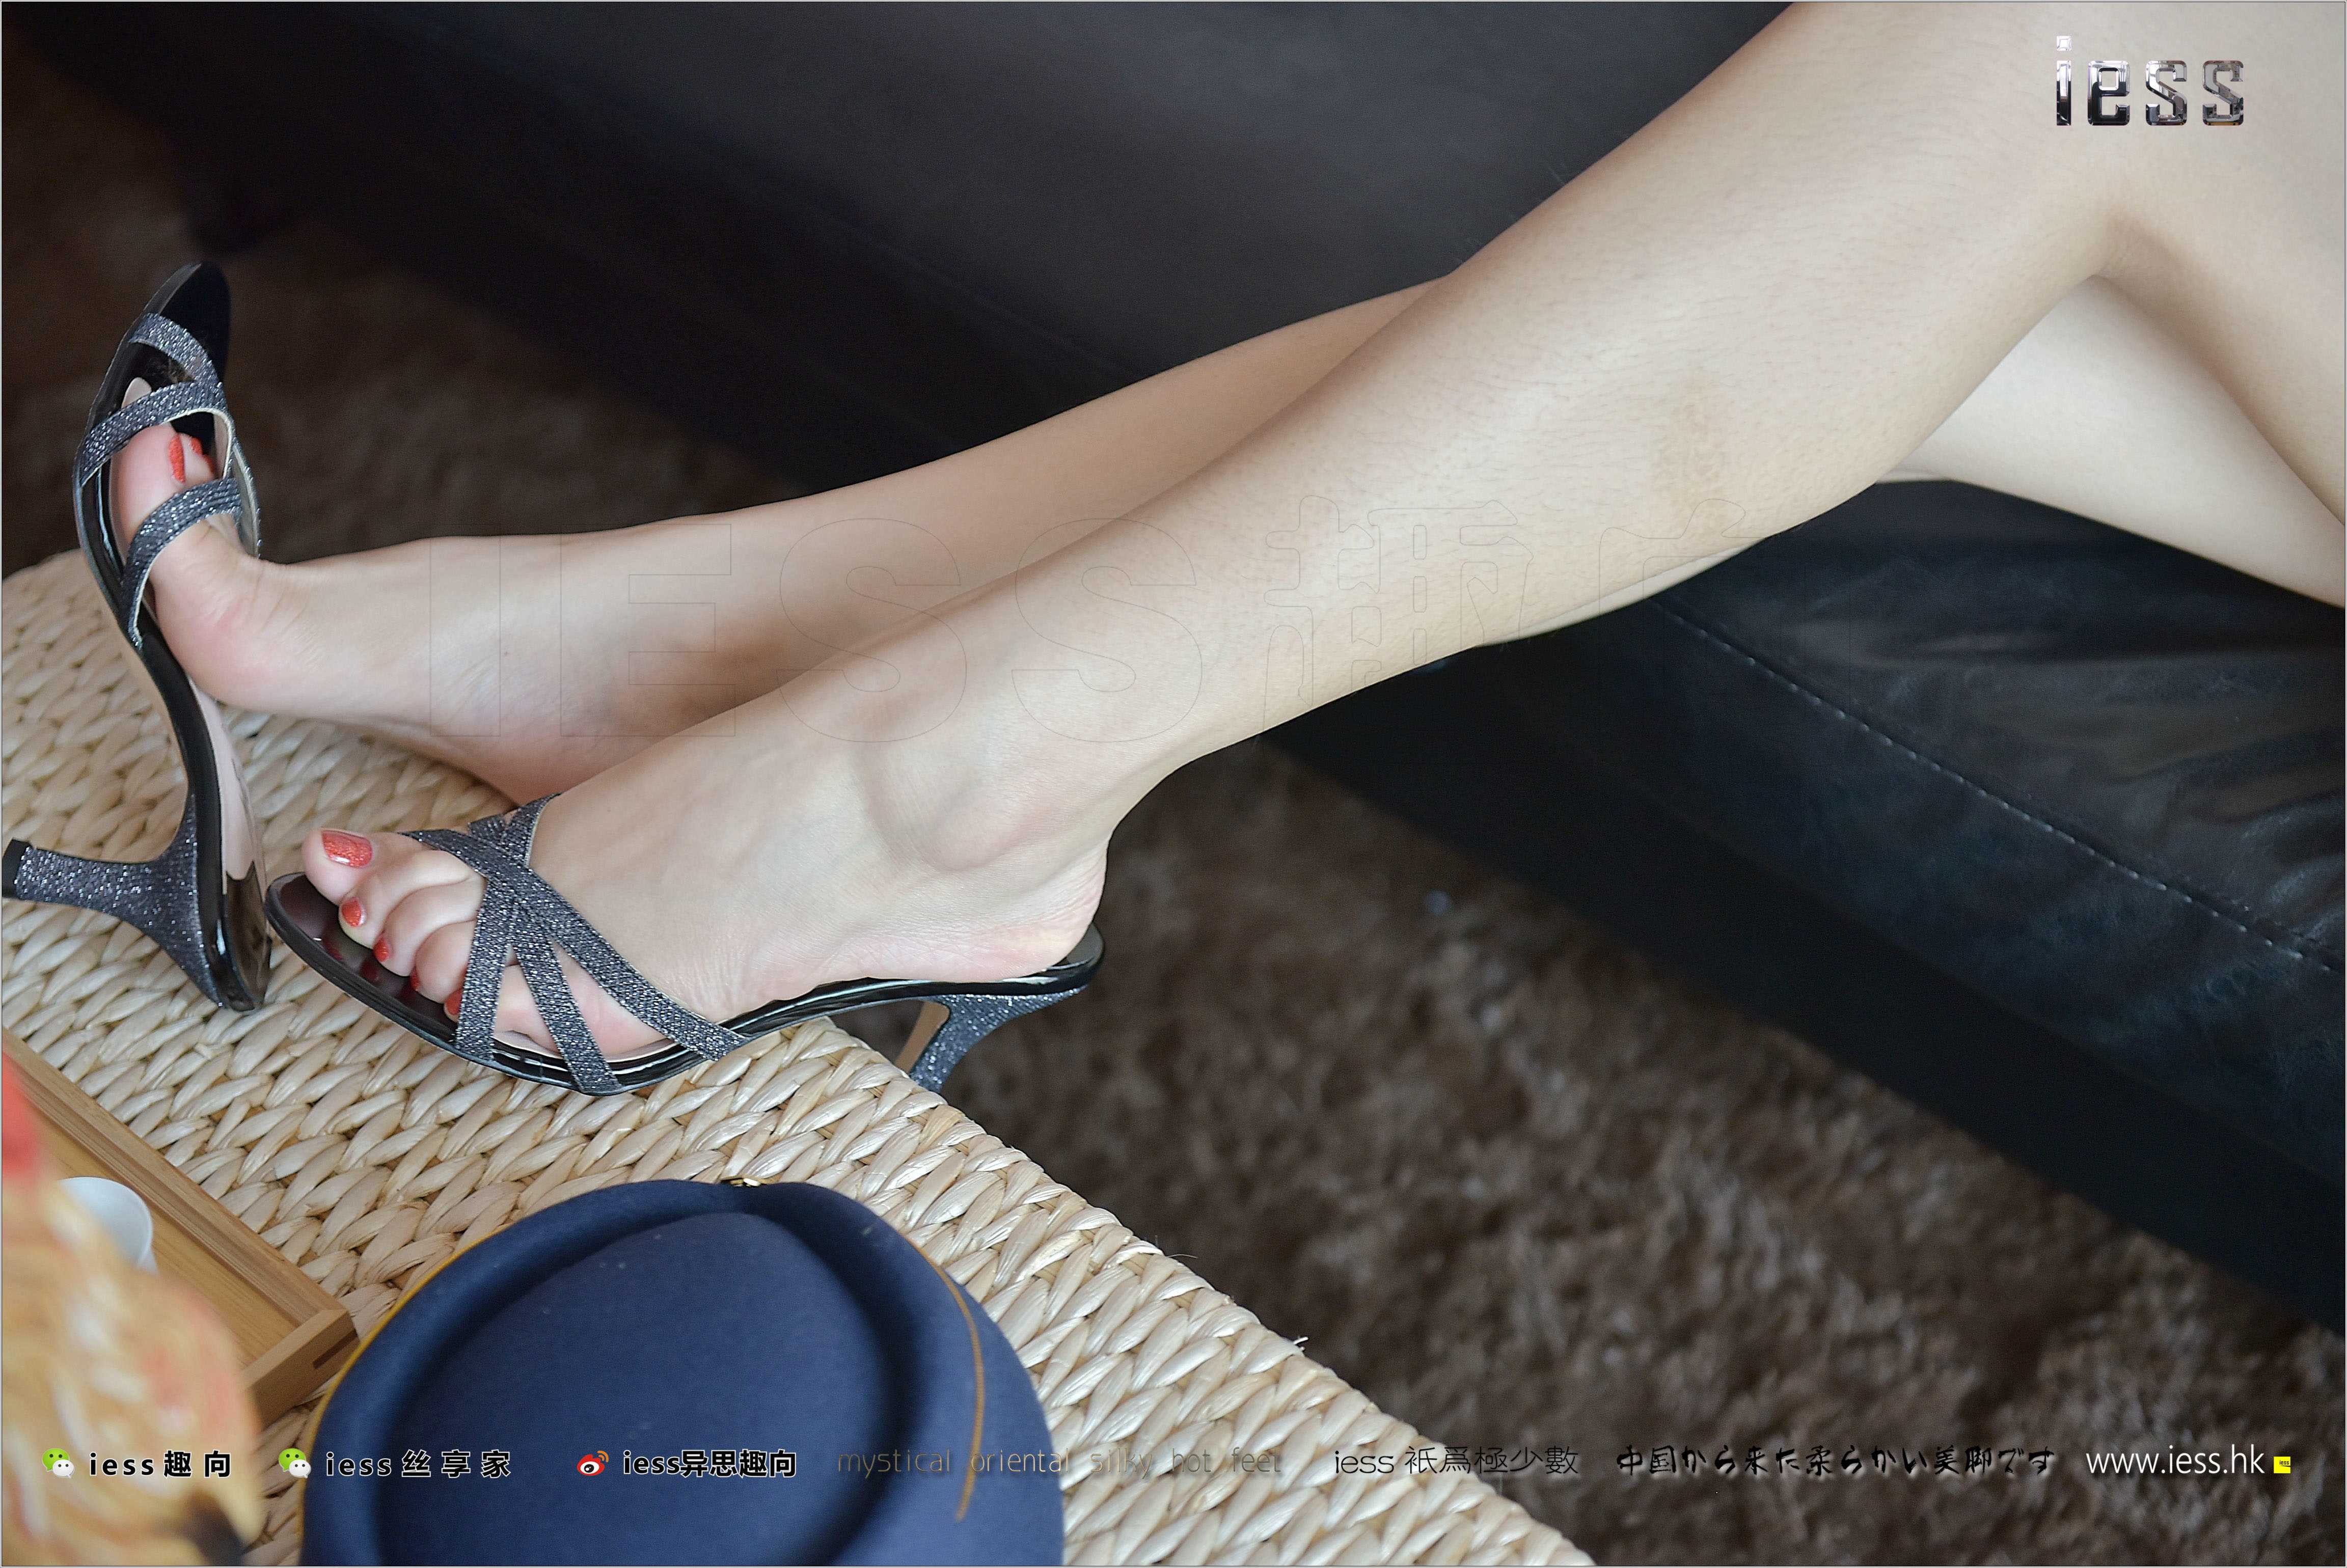 China Beauty Legs and feet 253